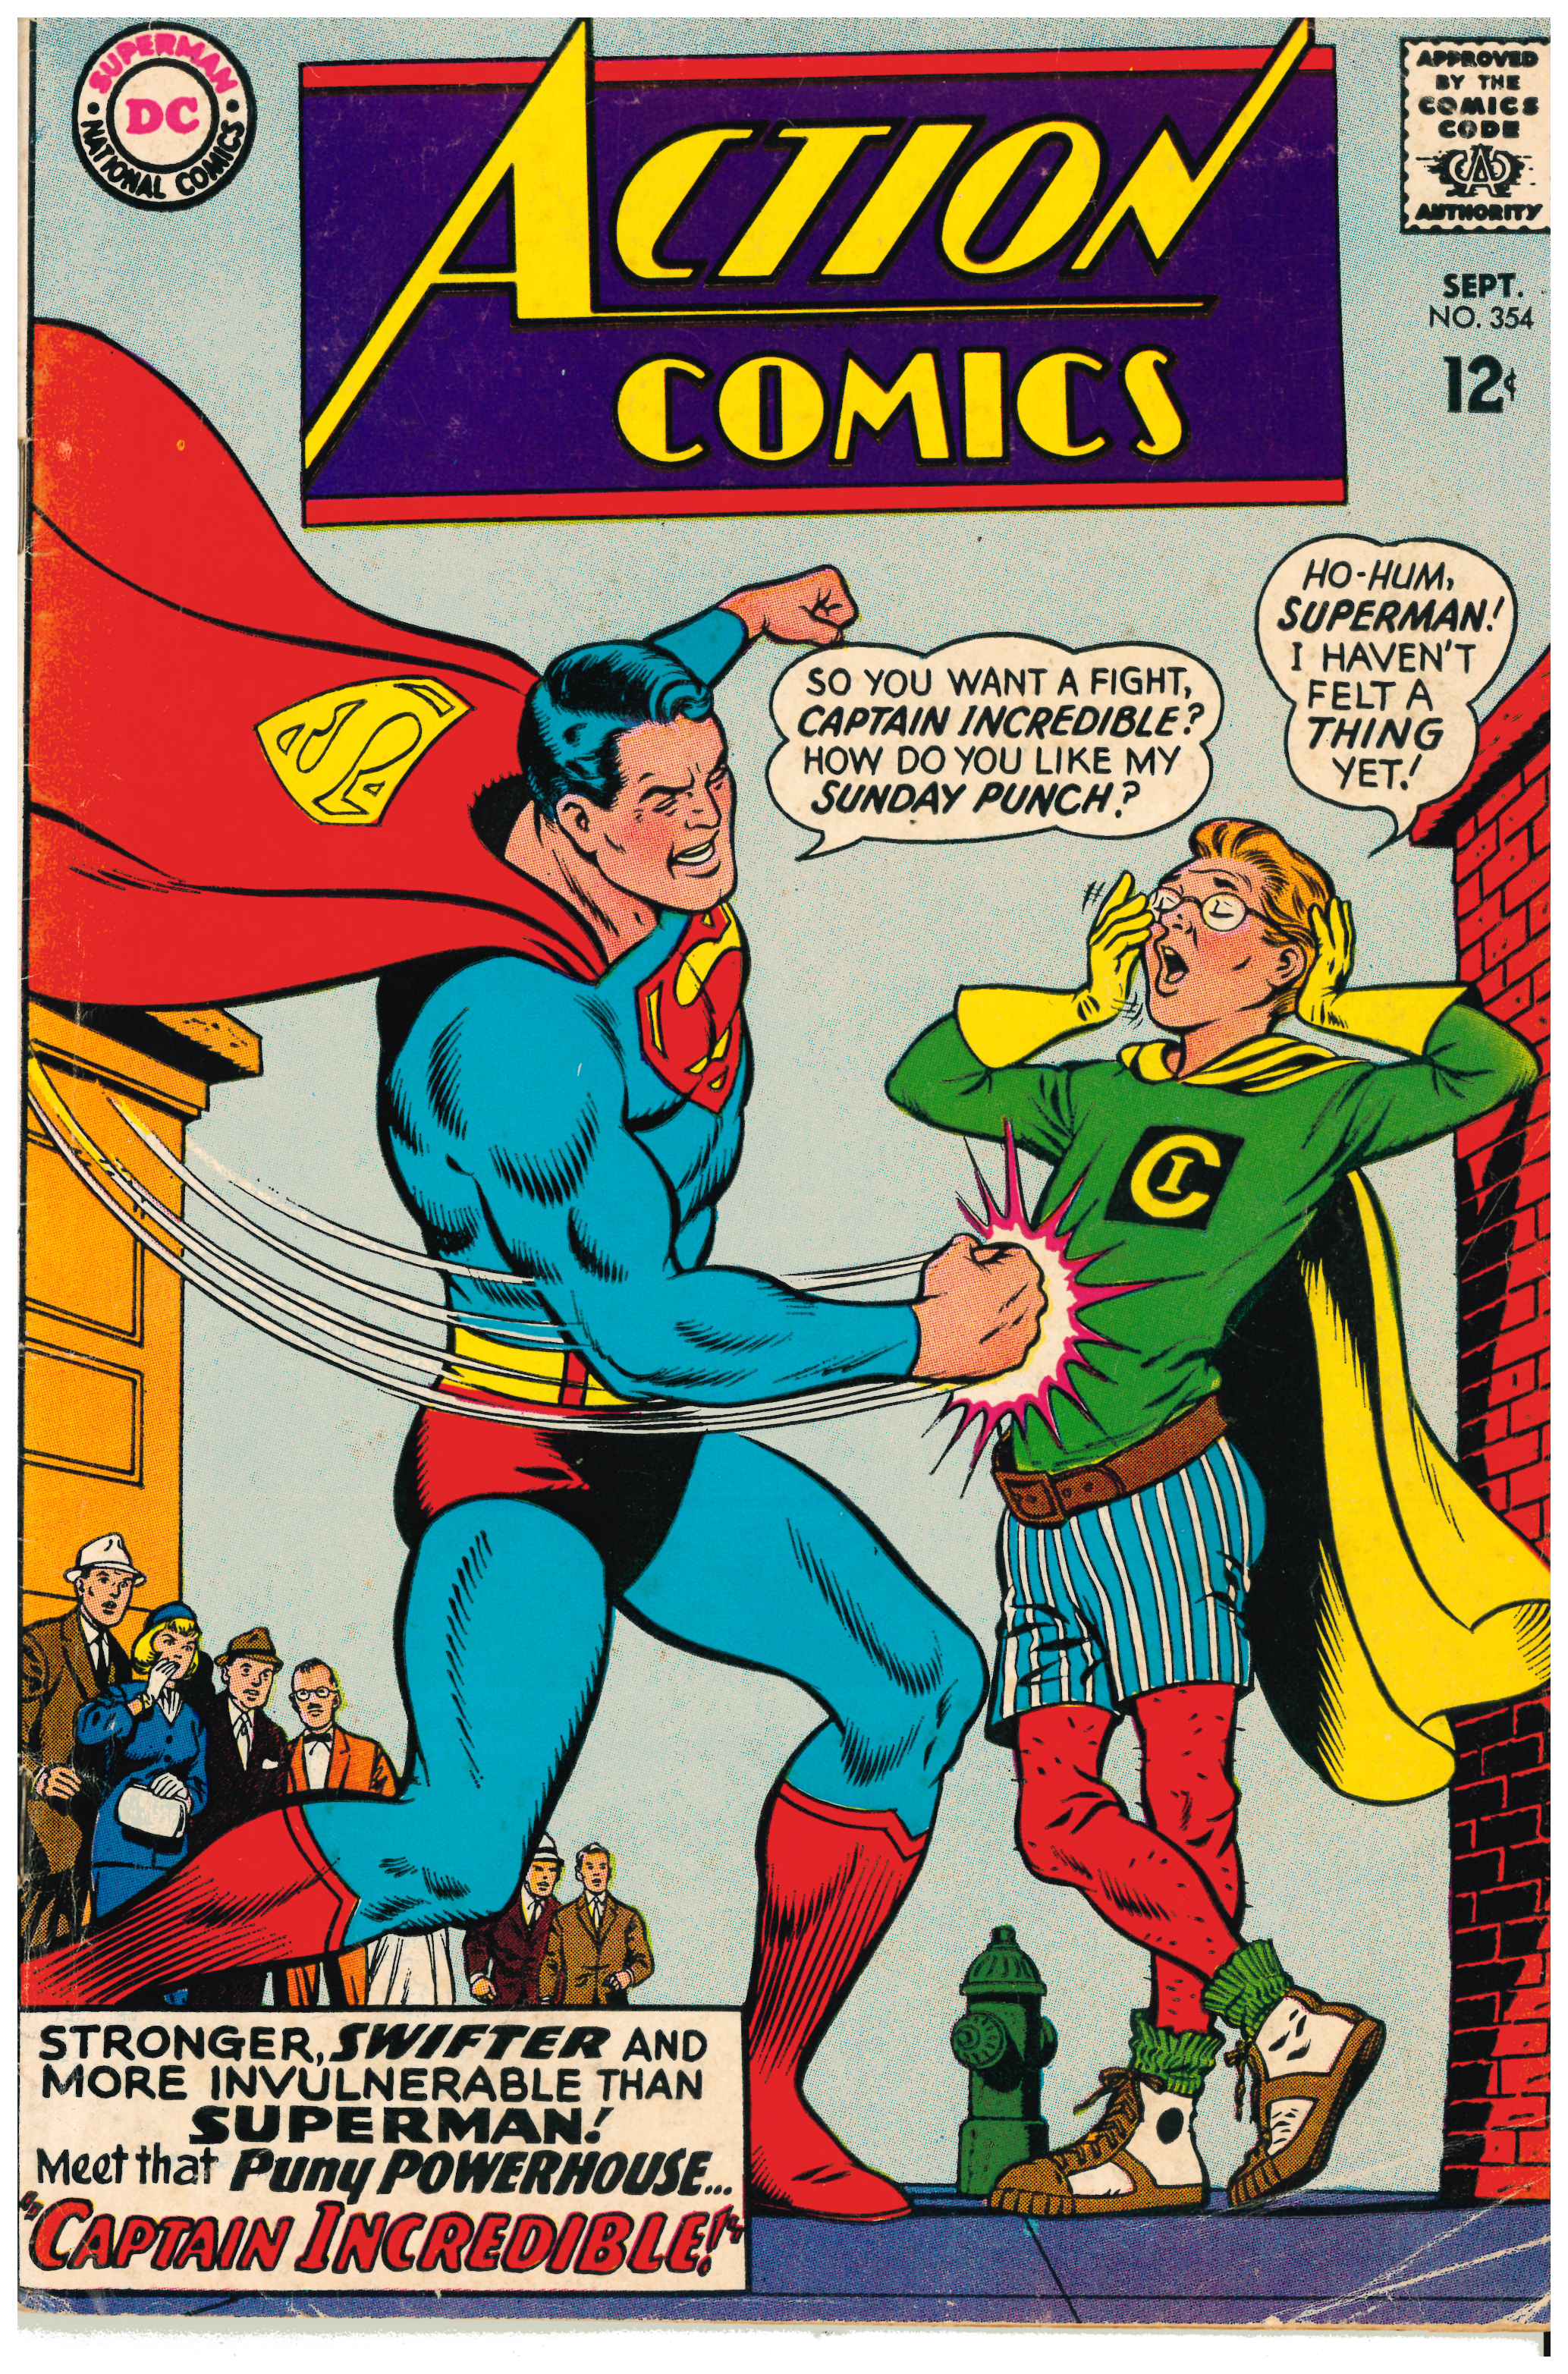 Action Comics #354